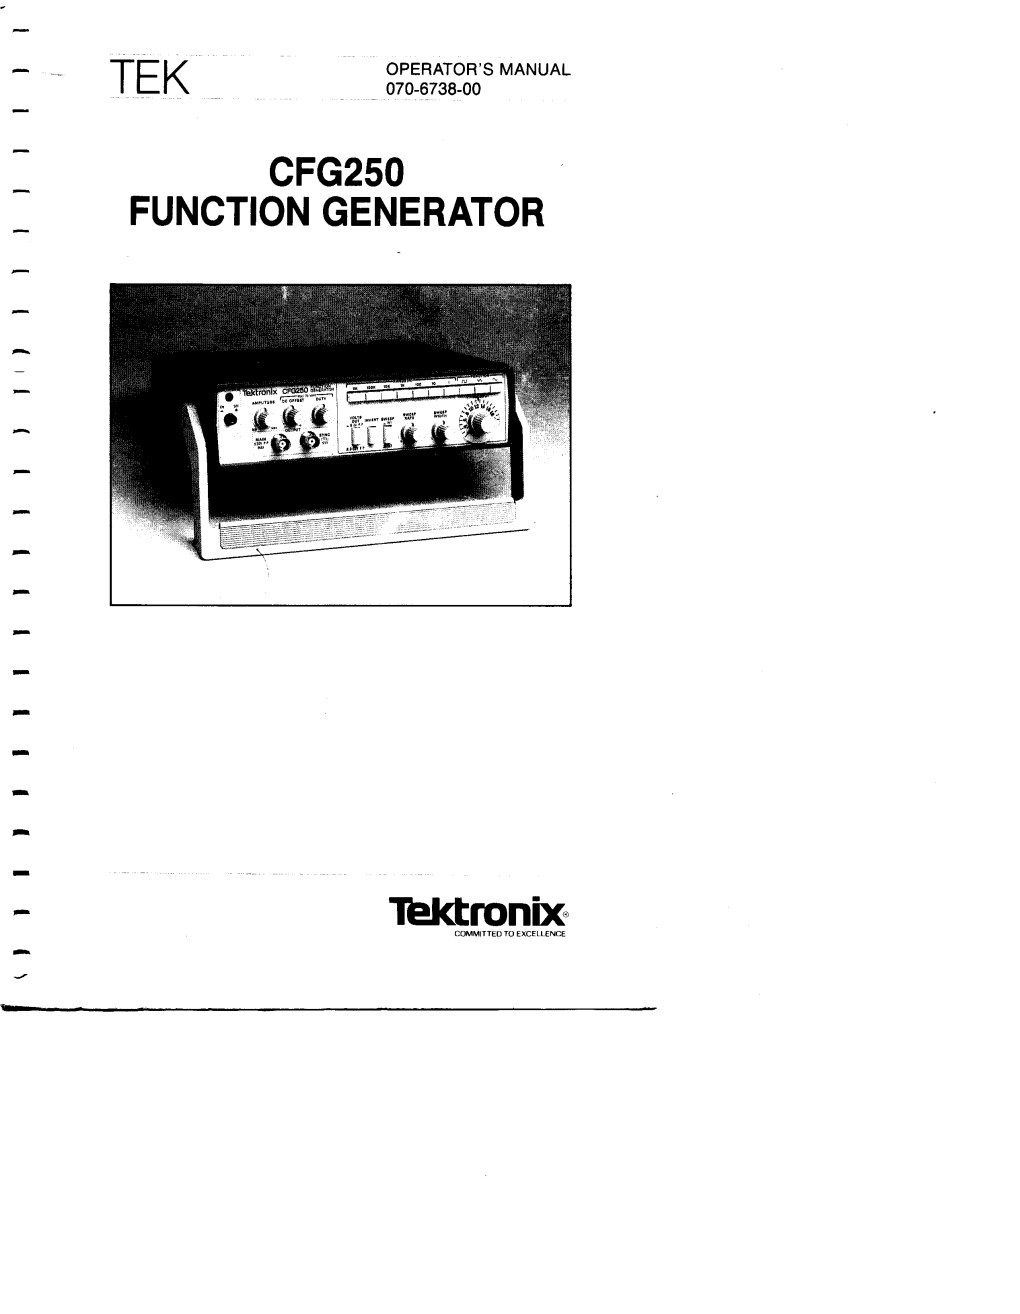 Tektronix CFG250 Function Generator